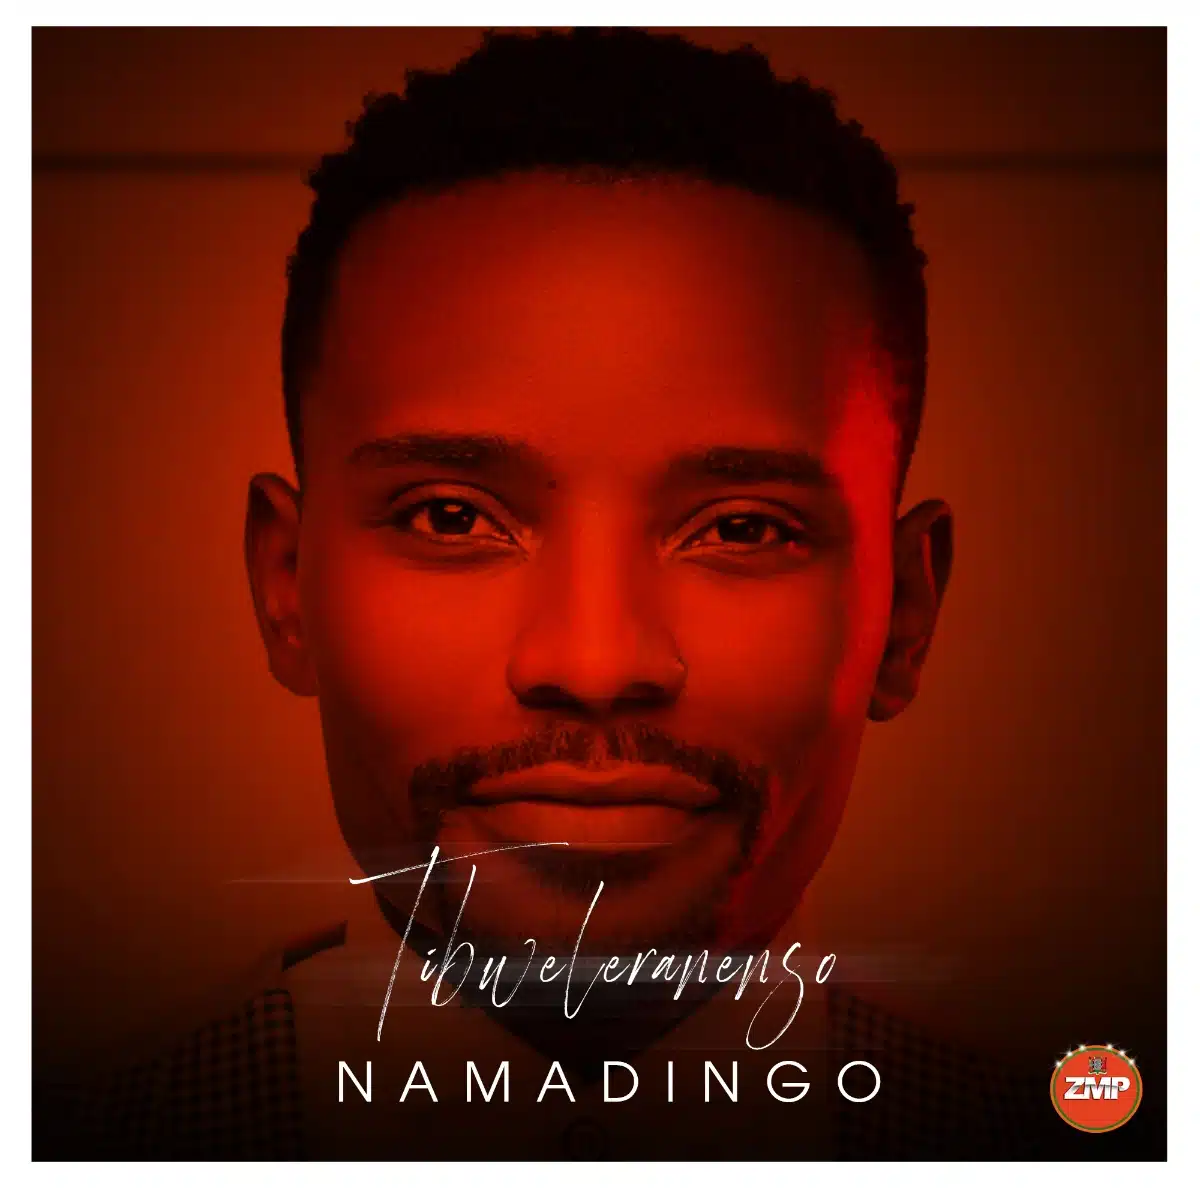 DOWNLOAD: Namadingo – “Tibweleranenso” Mp3